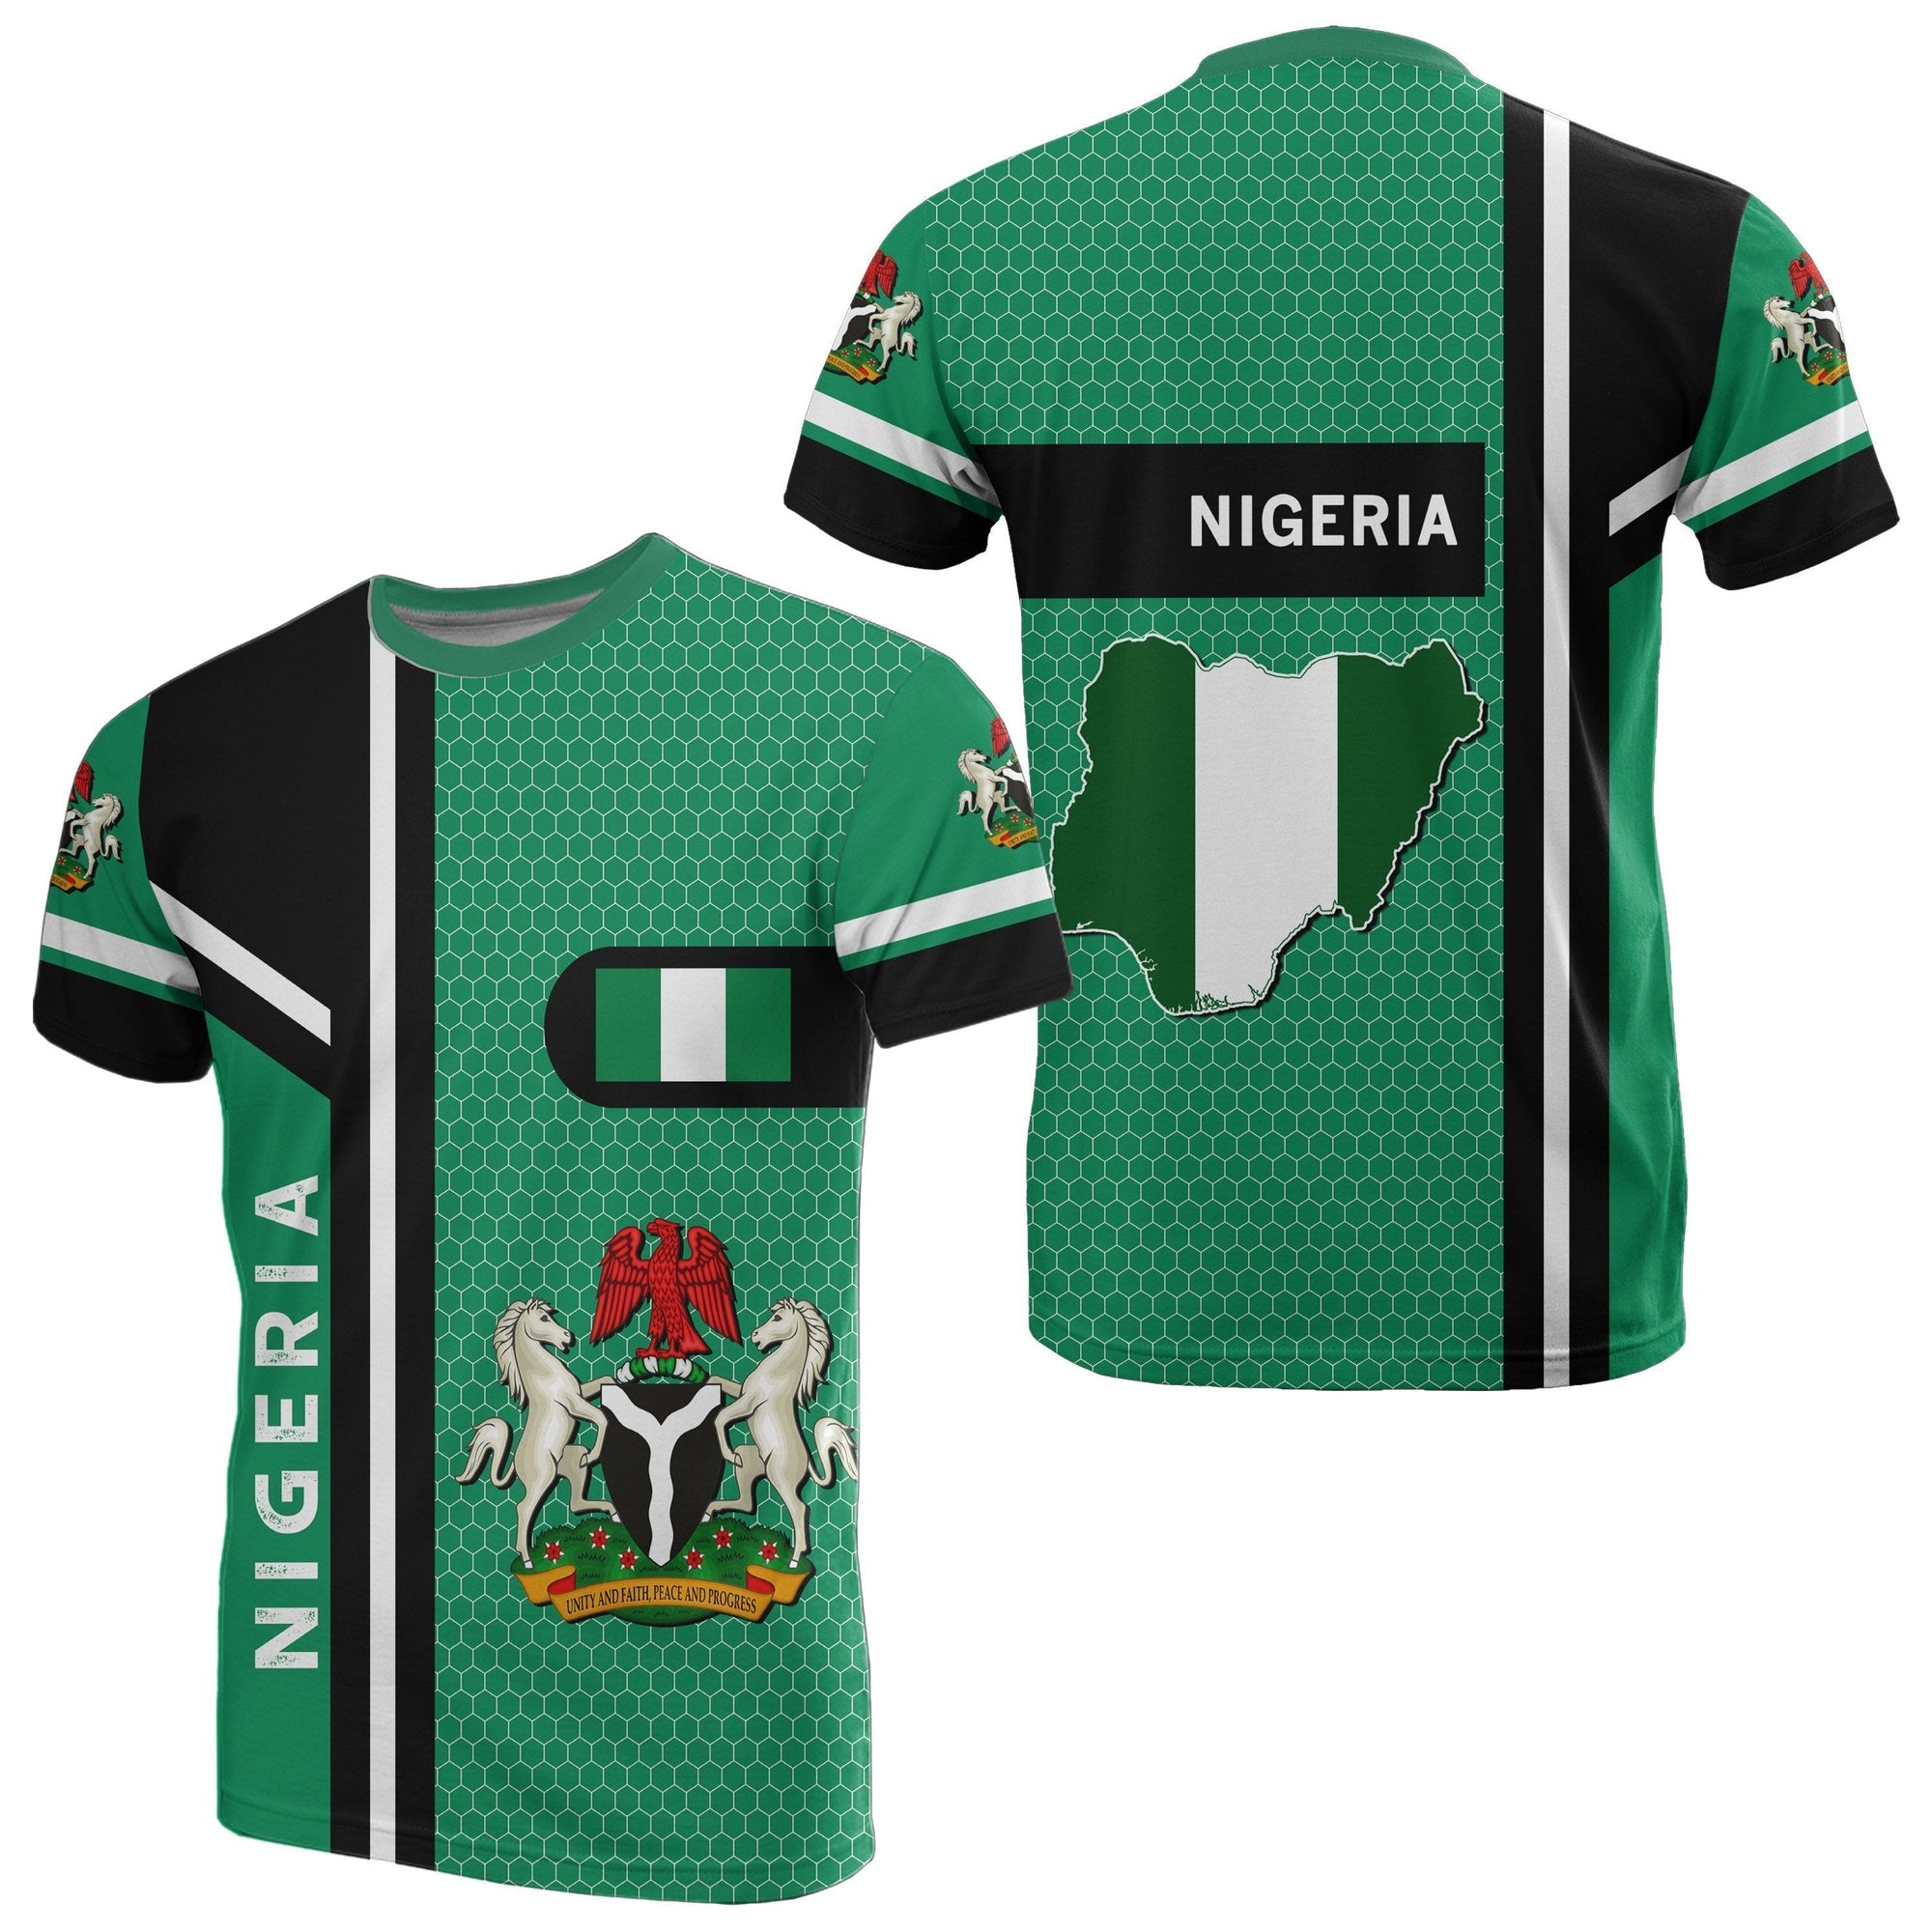 wonder-print-shop-t-shirt-nigeria-tee-flag-morale-style